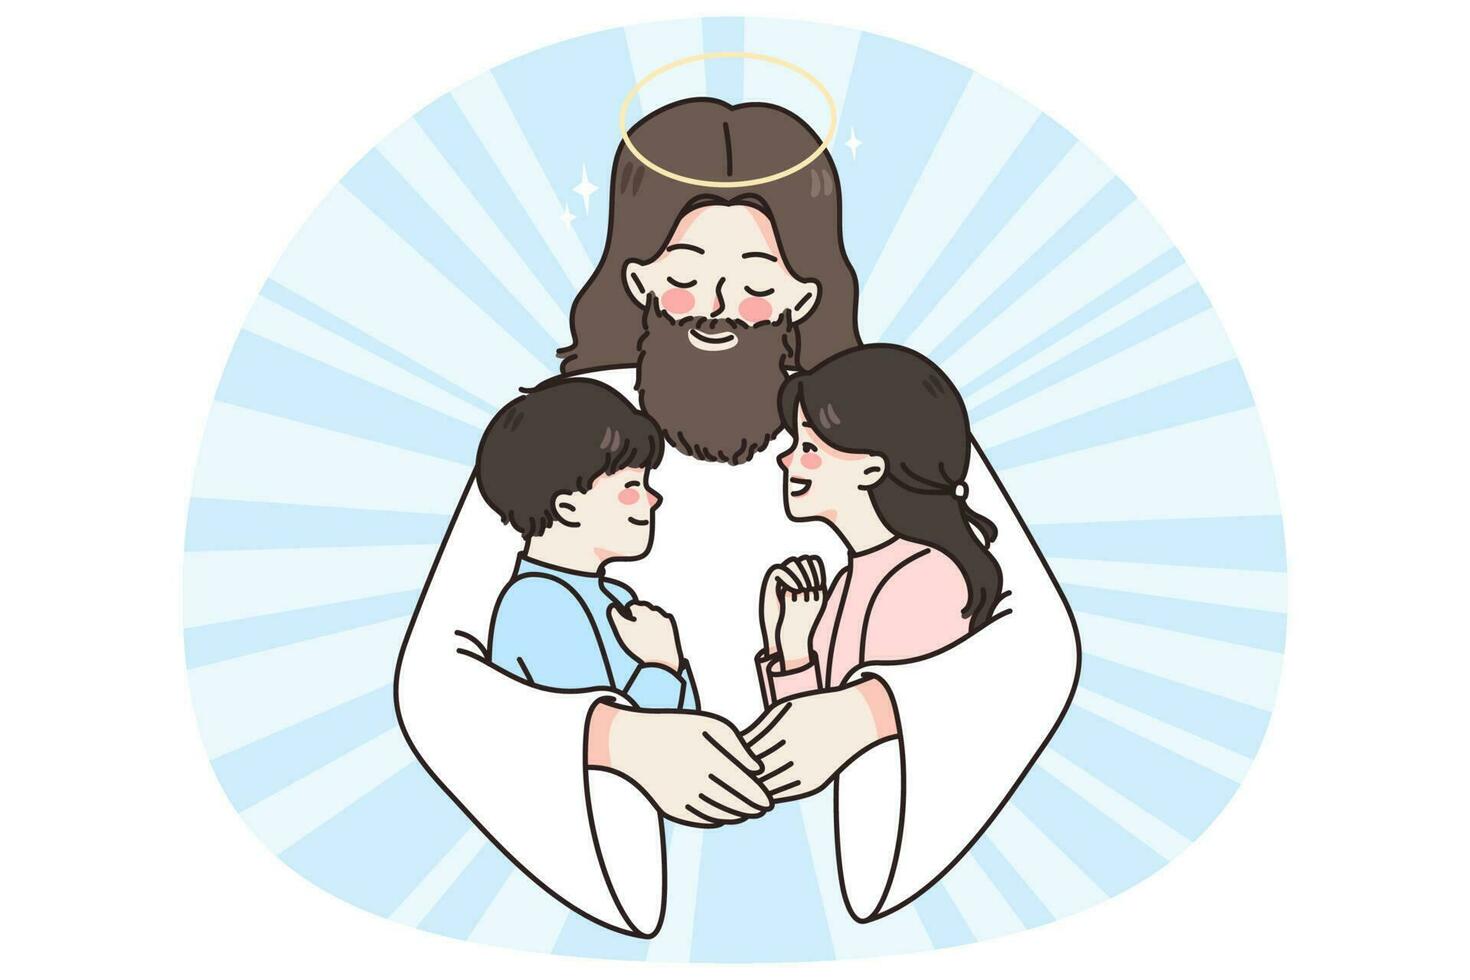 Jezus Christus knuffel knuffelen klein kinderen vector